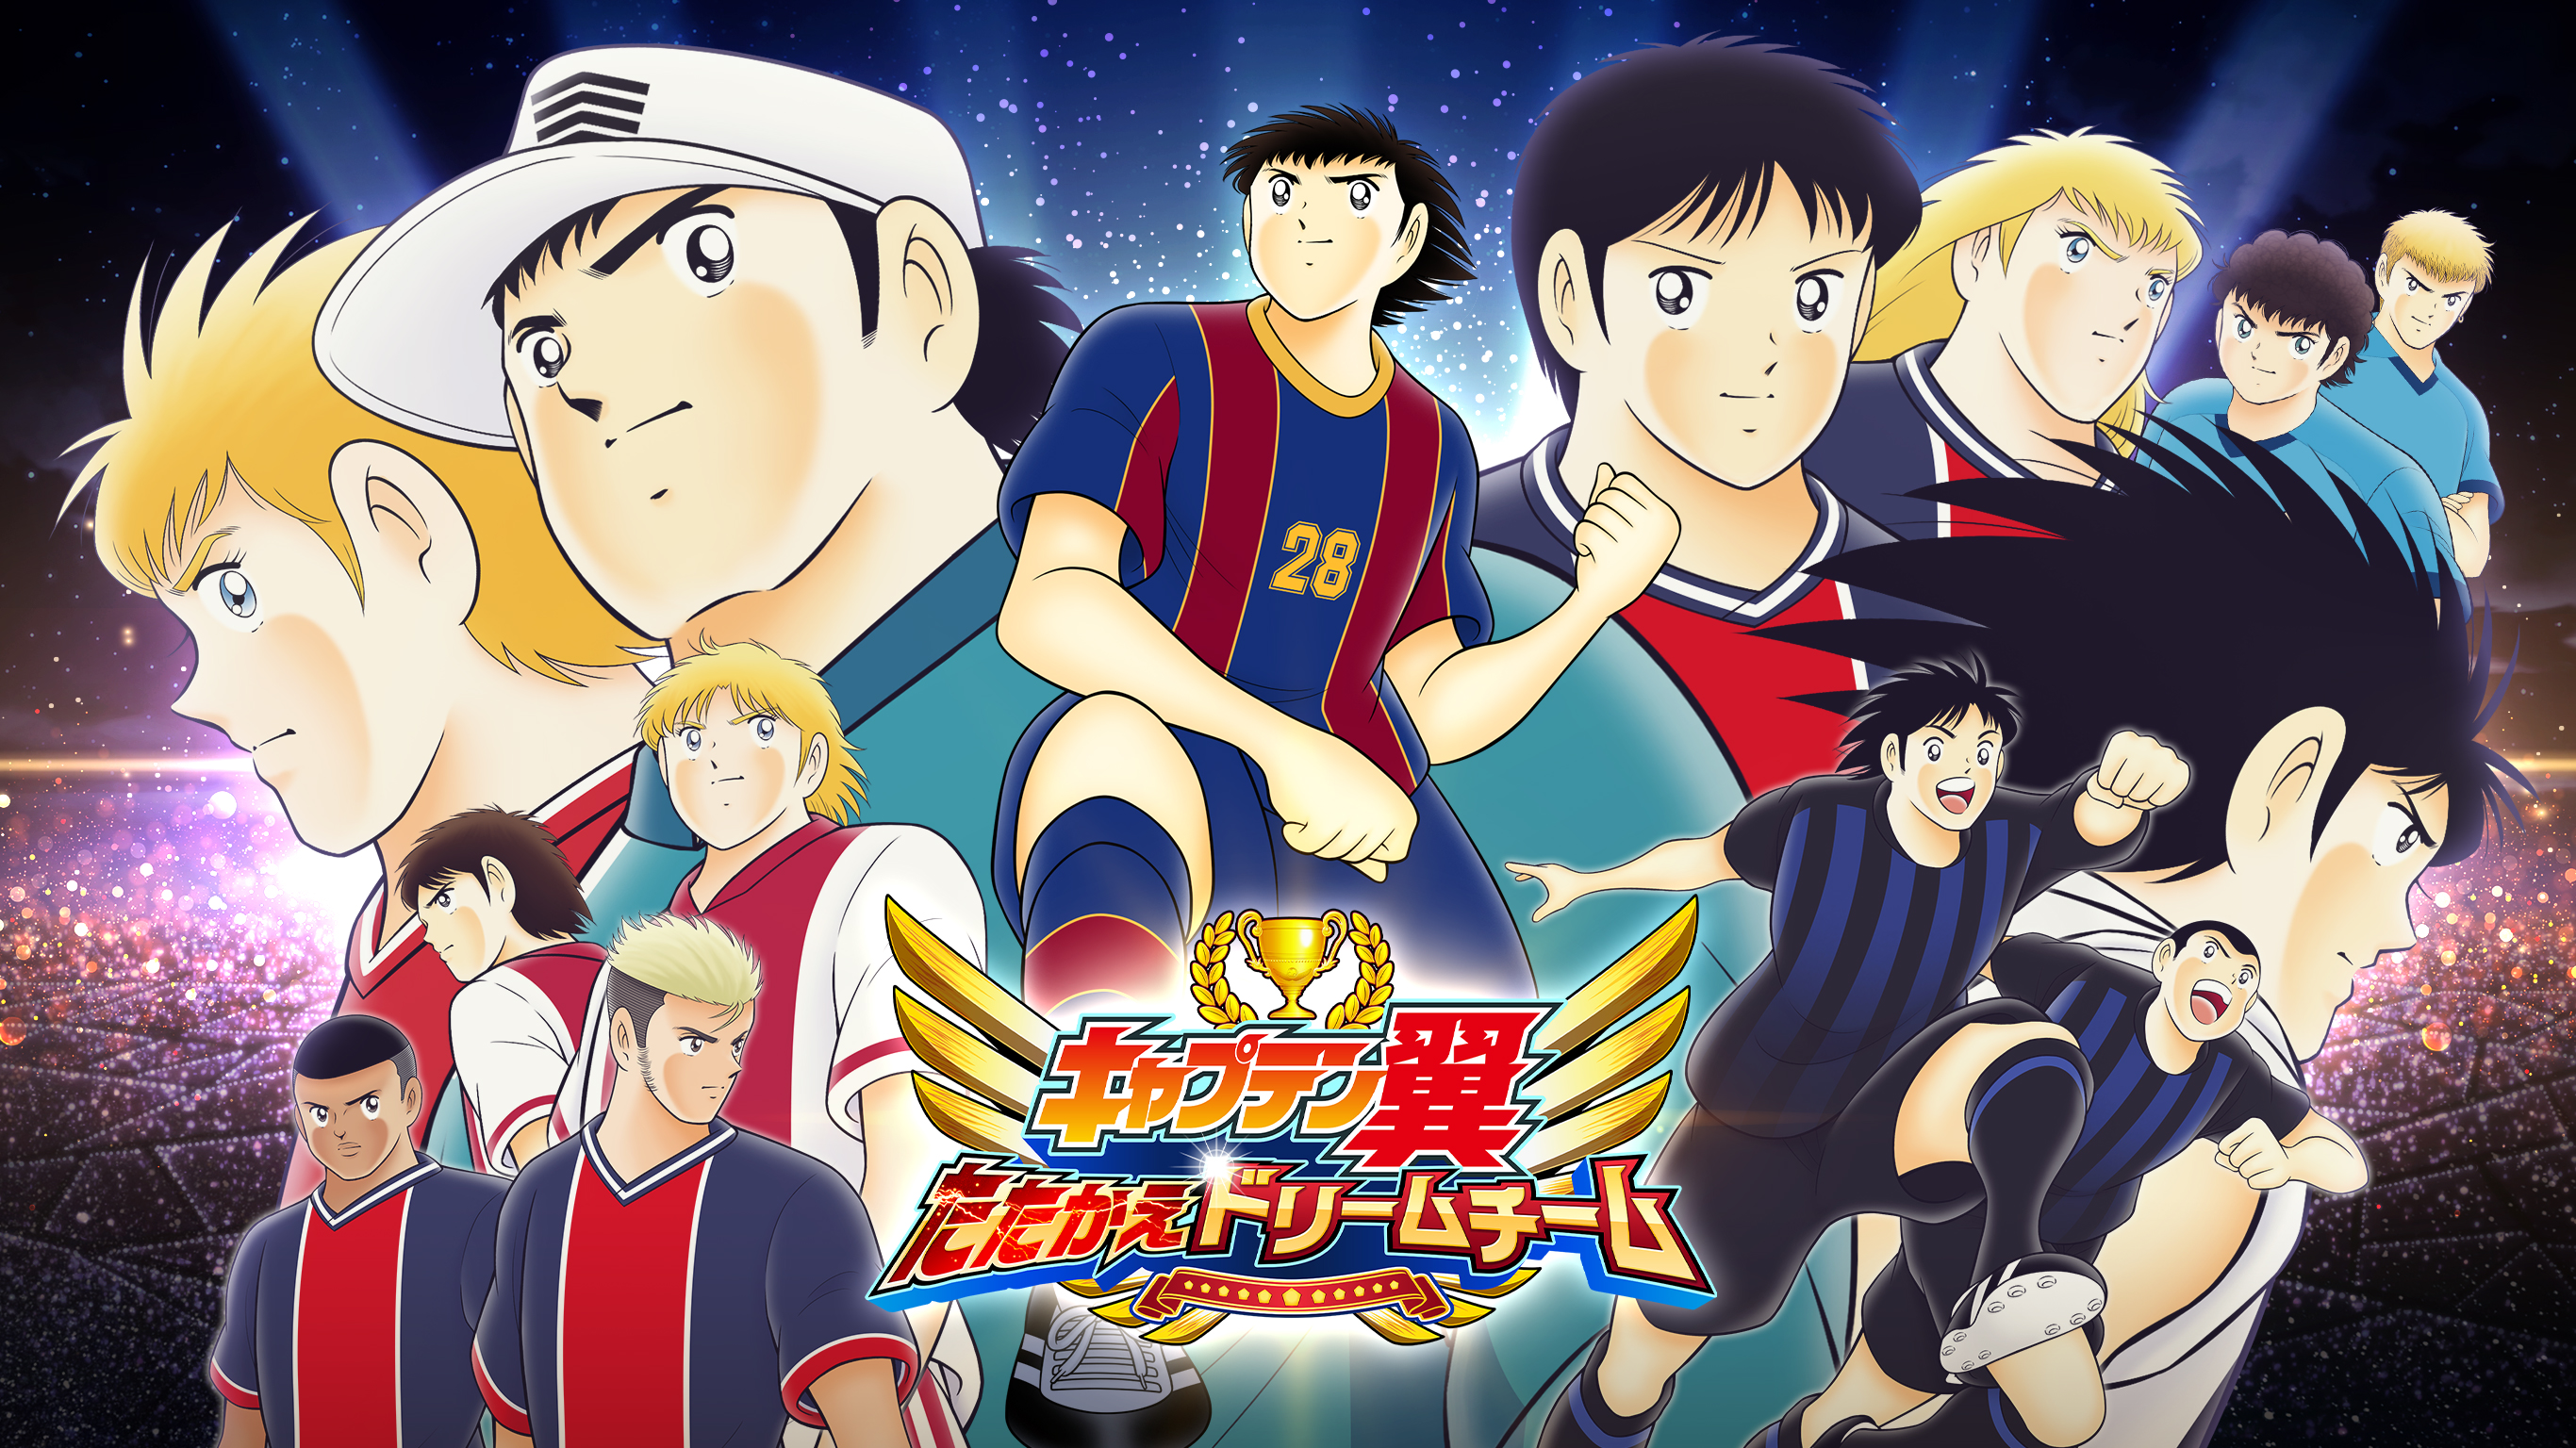 Captain Tsubasa: Dream Team Official Site